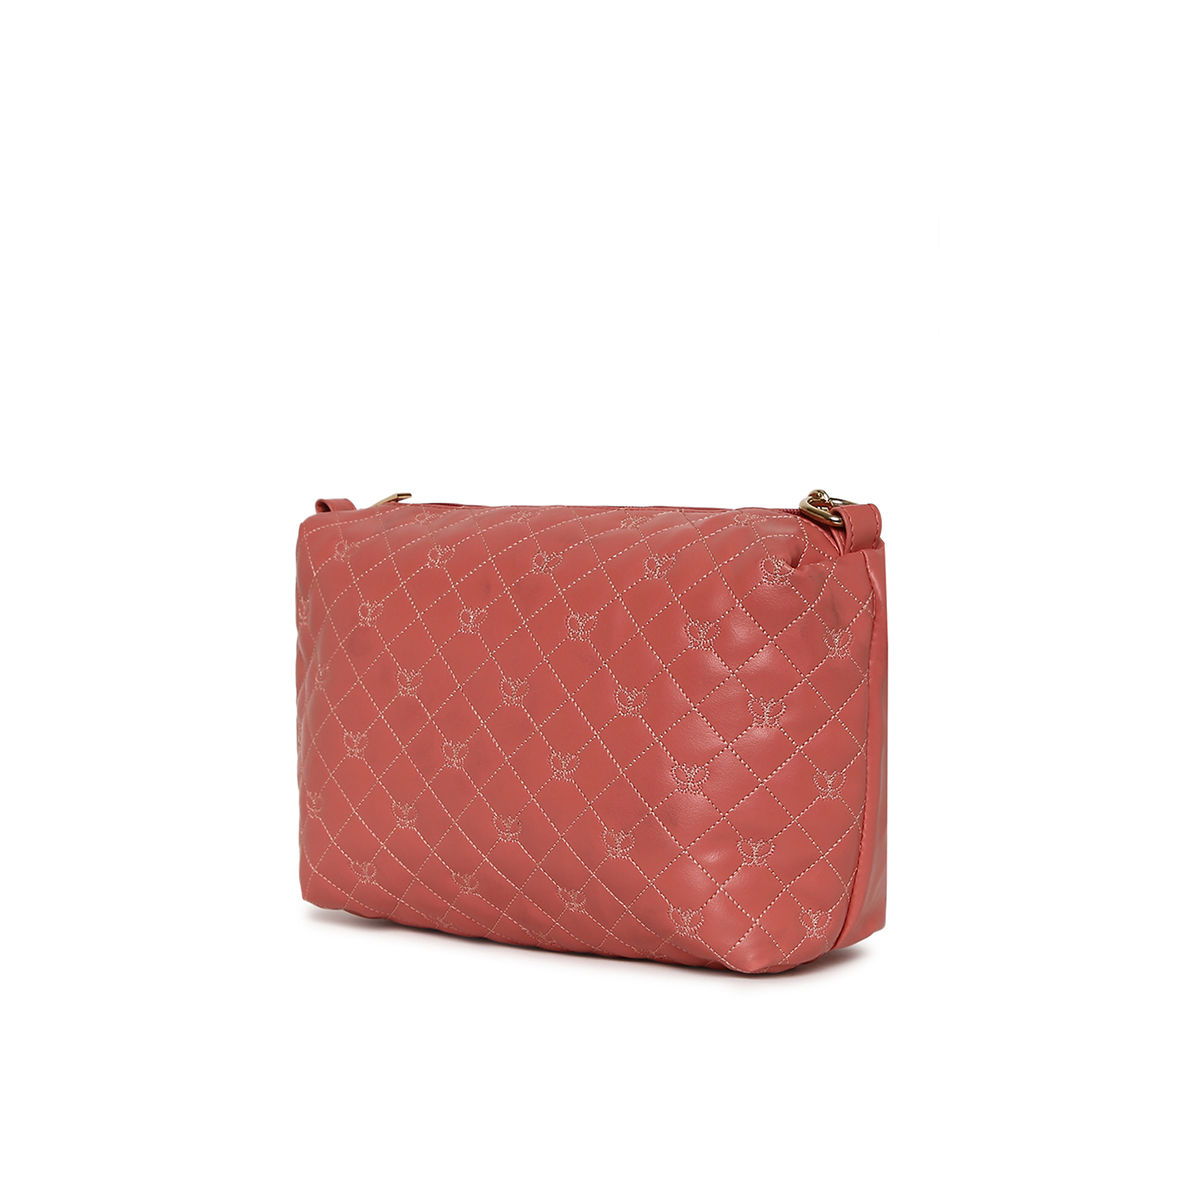 Premium Vector | Women clutch ladies bags purses trendy model handbags on  waist or shoulder fashion handbag luxury purse with chain leather strap